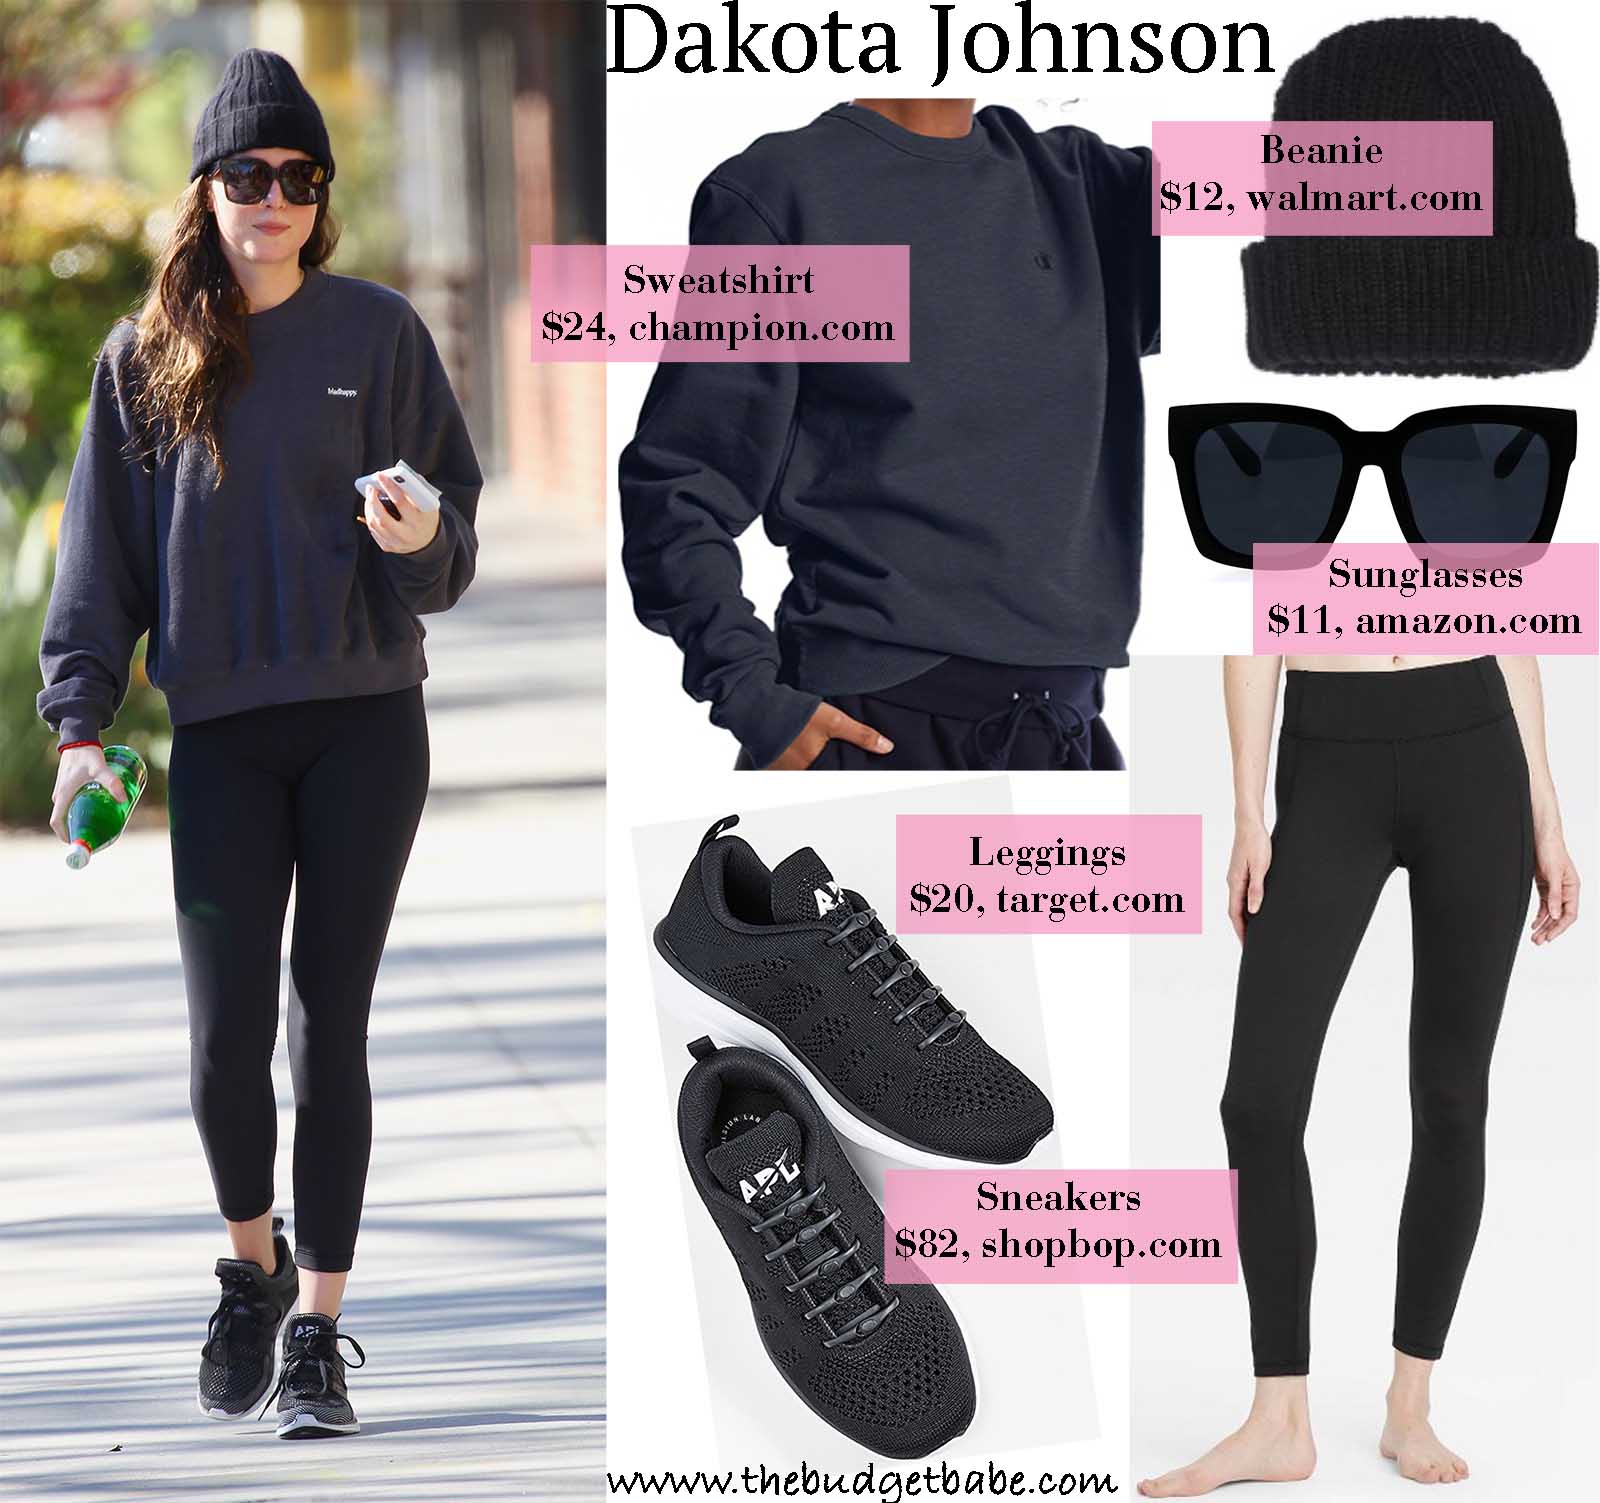 Dakota Johnson stays cozy in a stylish sweats.